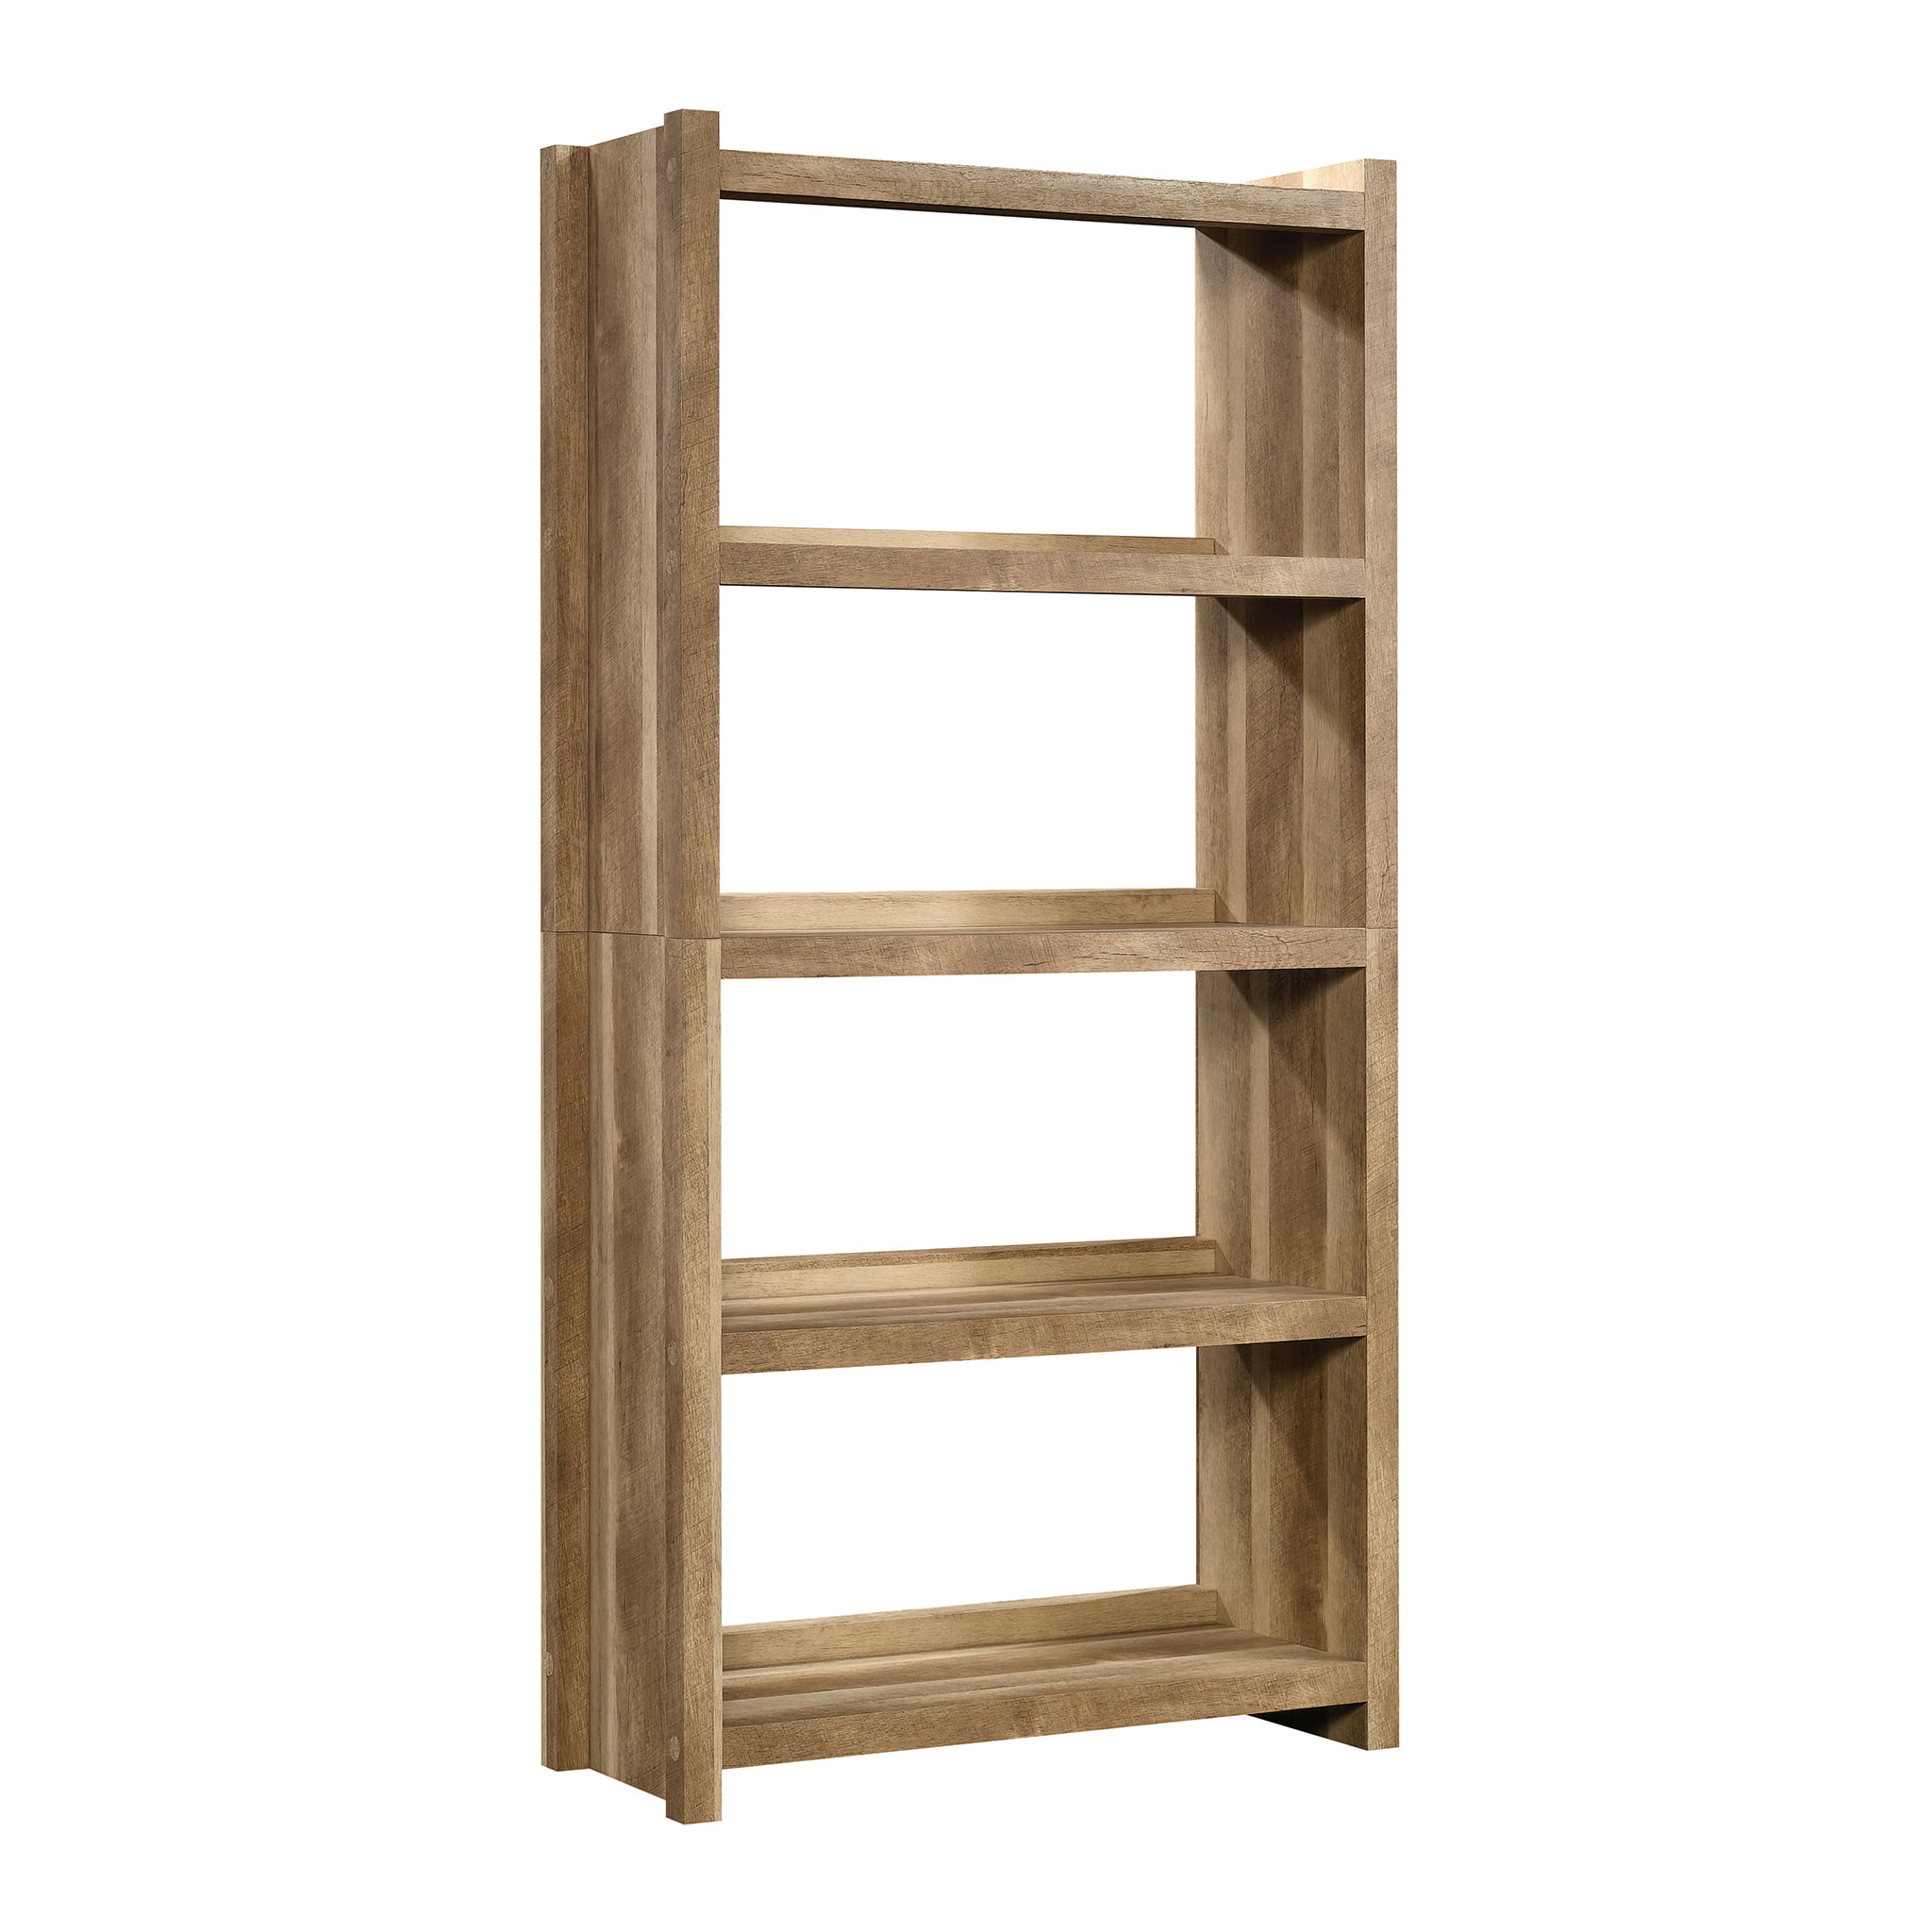 Zeug lepel Kauwgom Sauder HomePlus Storage Bookcase, Lintel Oak Finish - Walmart.com